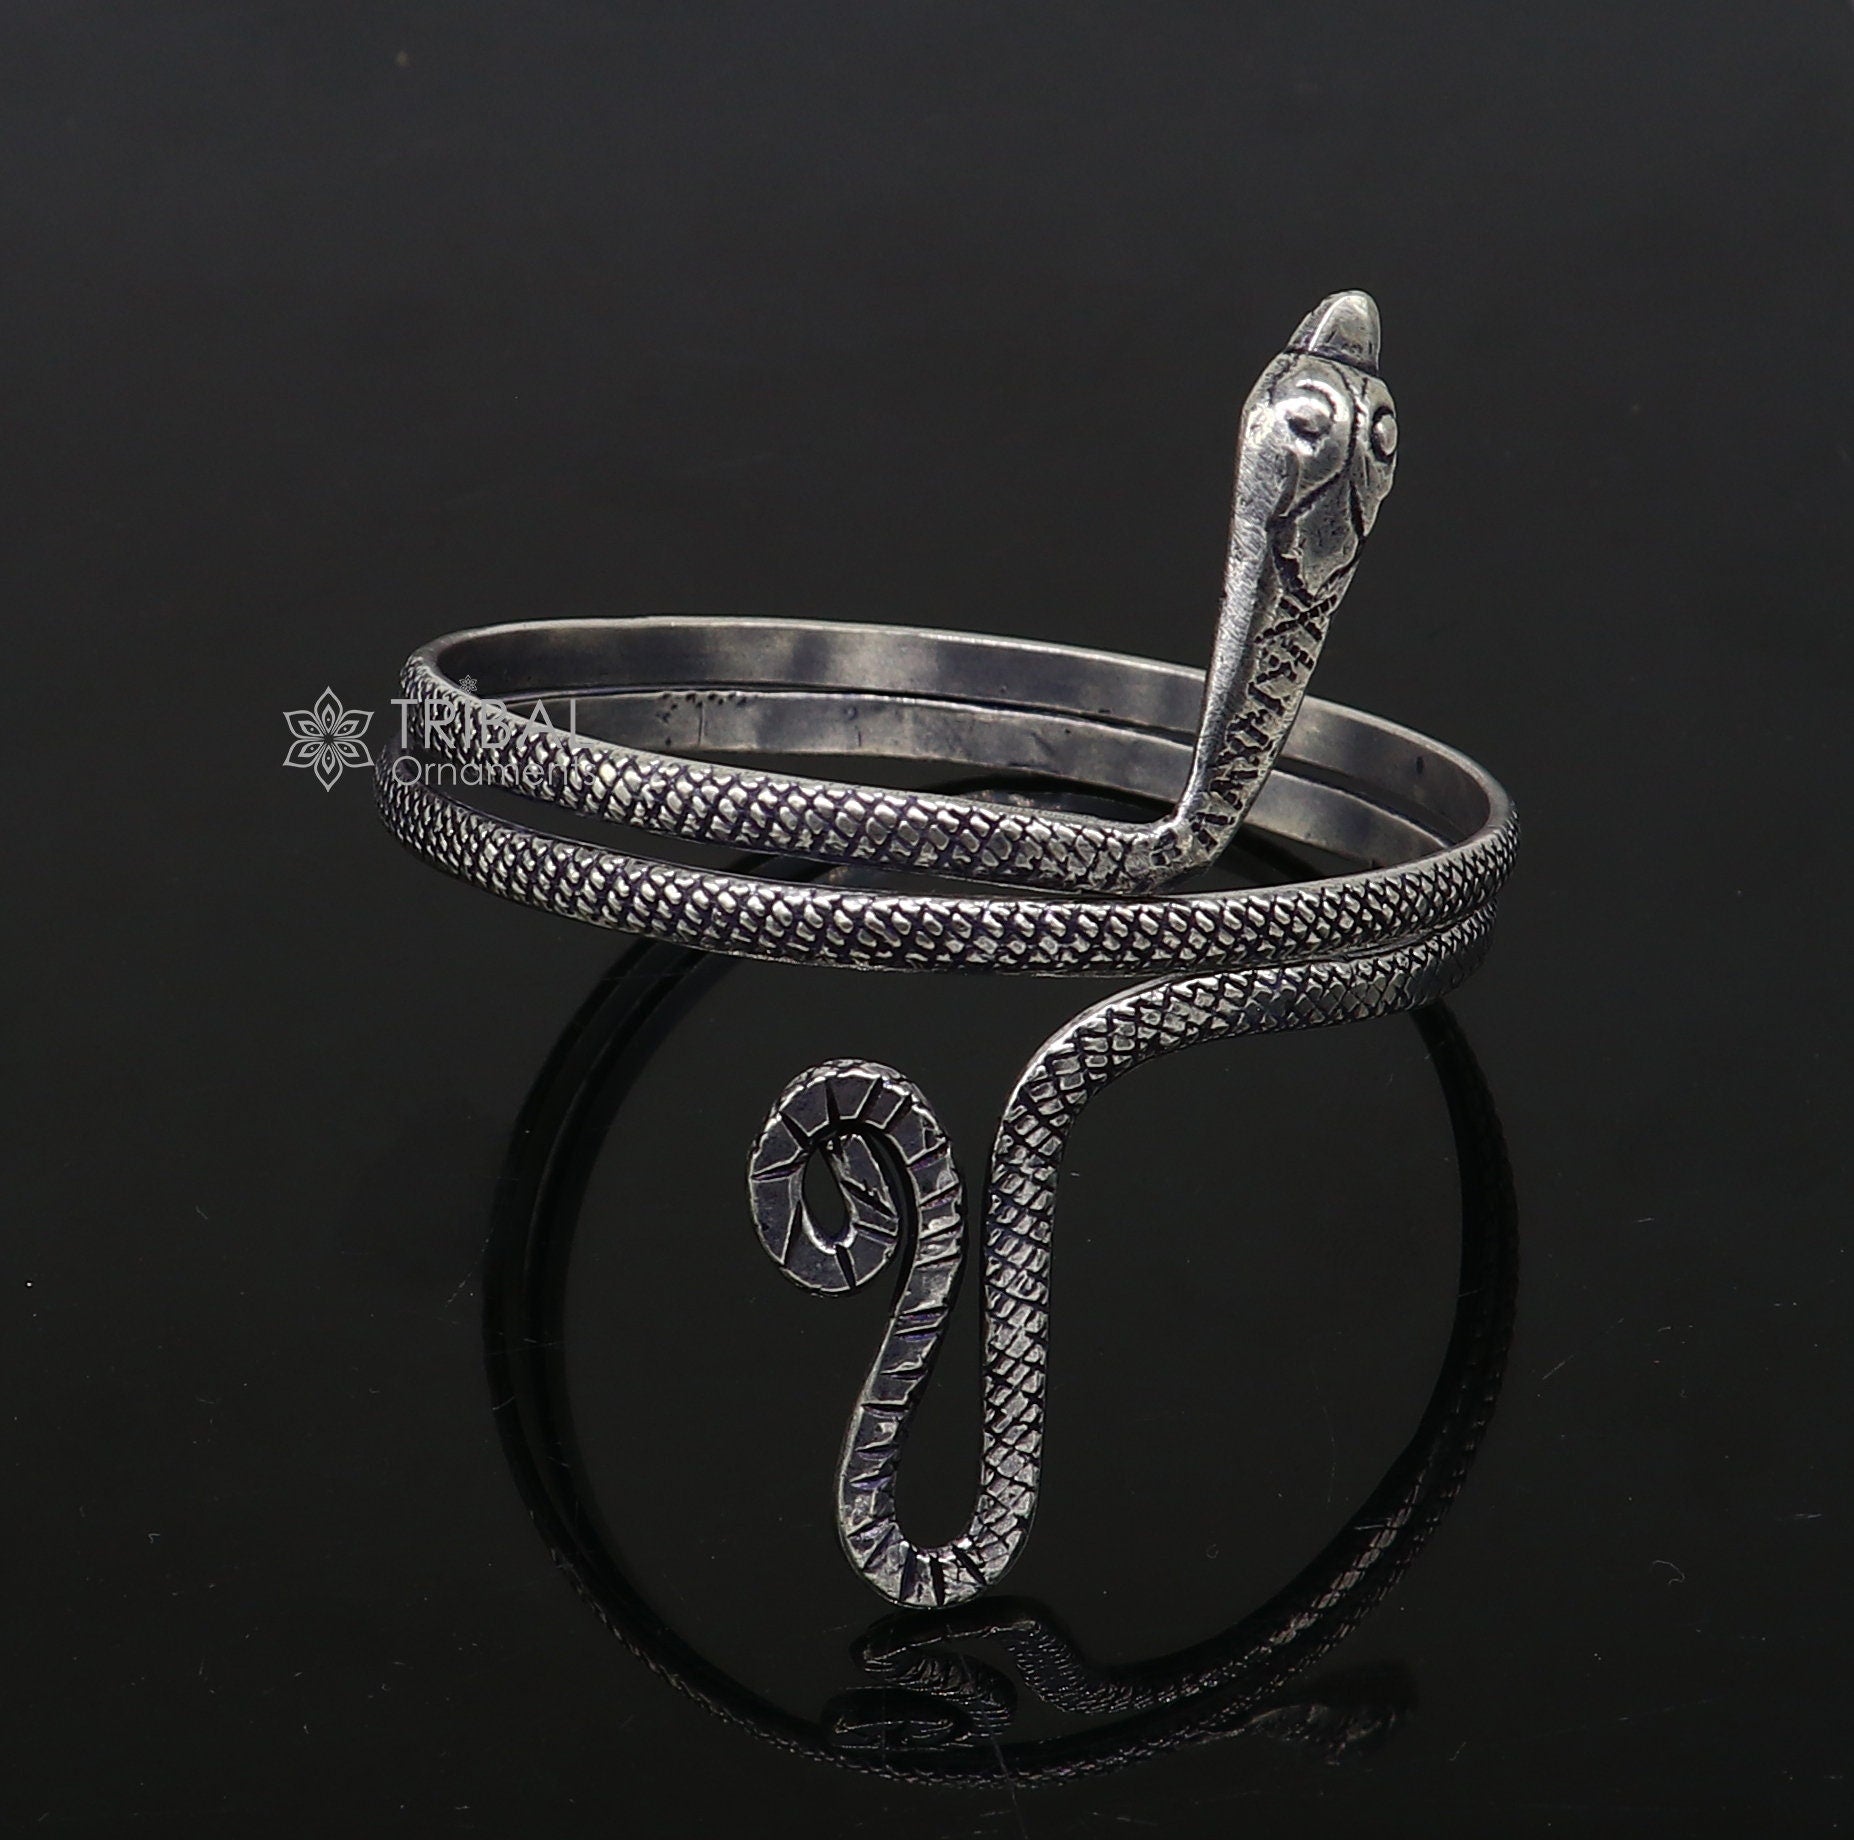 925 sterling silver handmade unique snake design armlet, Cuff bracelet bangle, best arm bracelet or ankle bracelet combo use jewelry nsk724 - TRIBAL ORNAMENTS